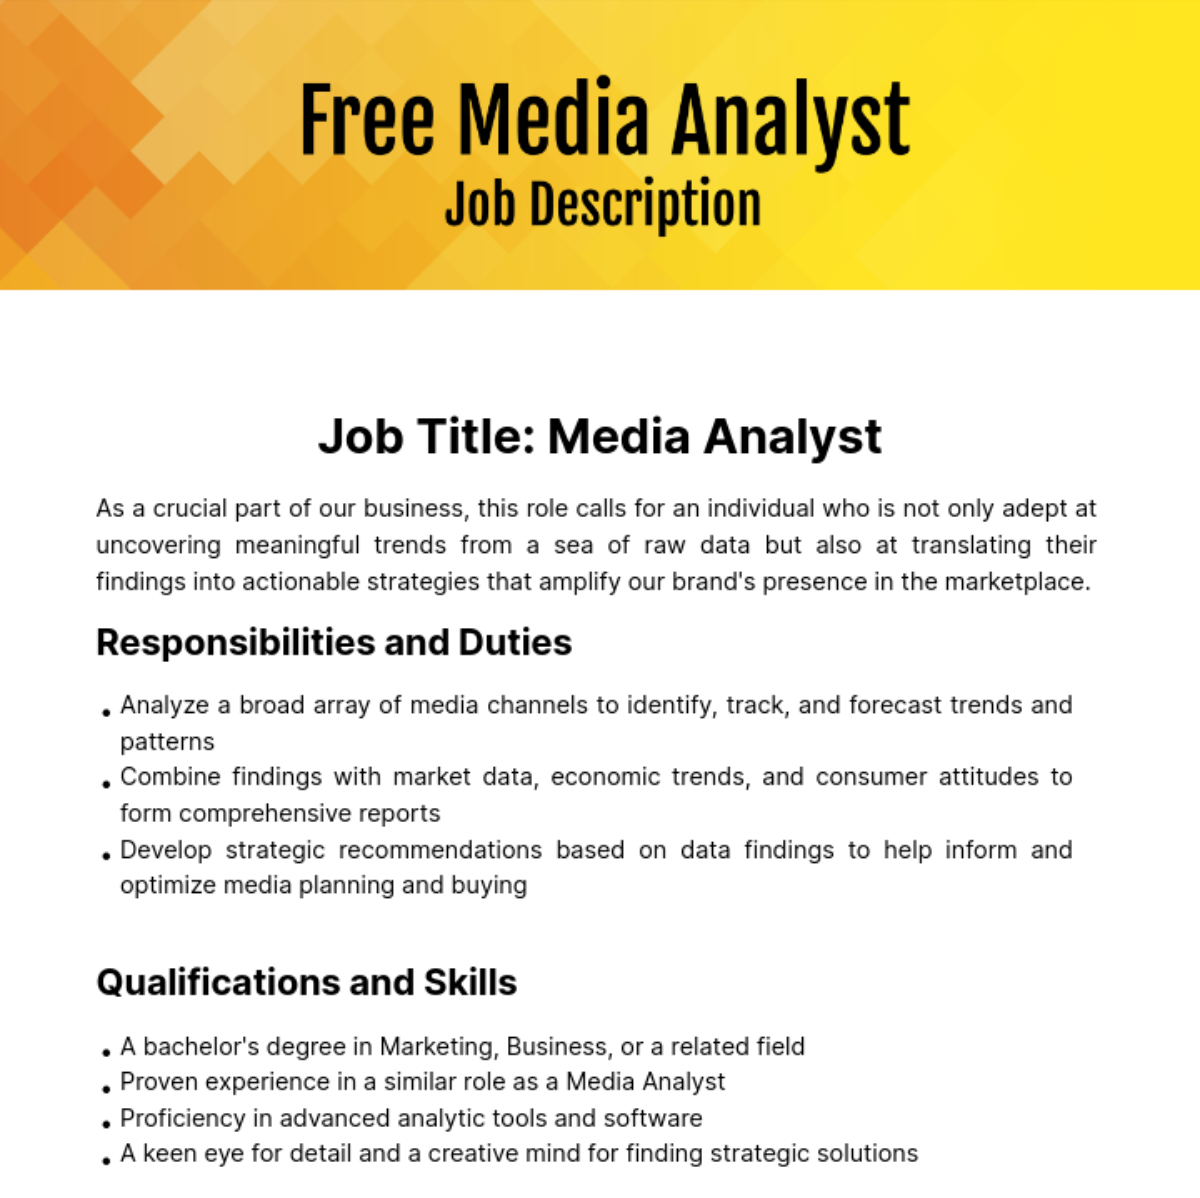 Free Media Analyst Job Description Template